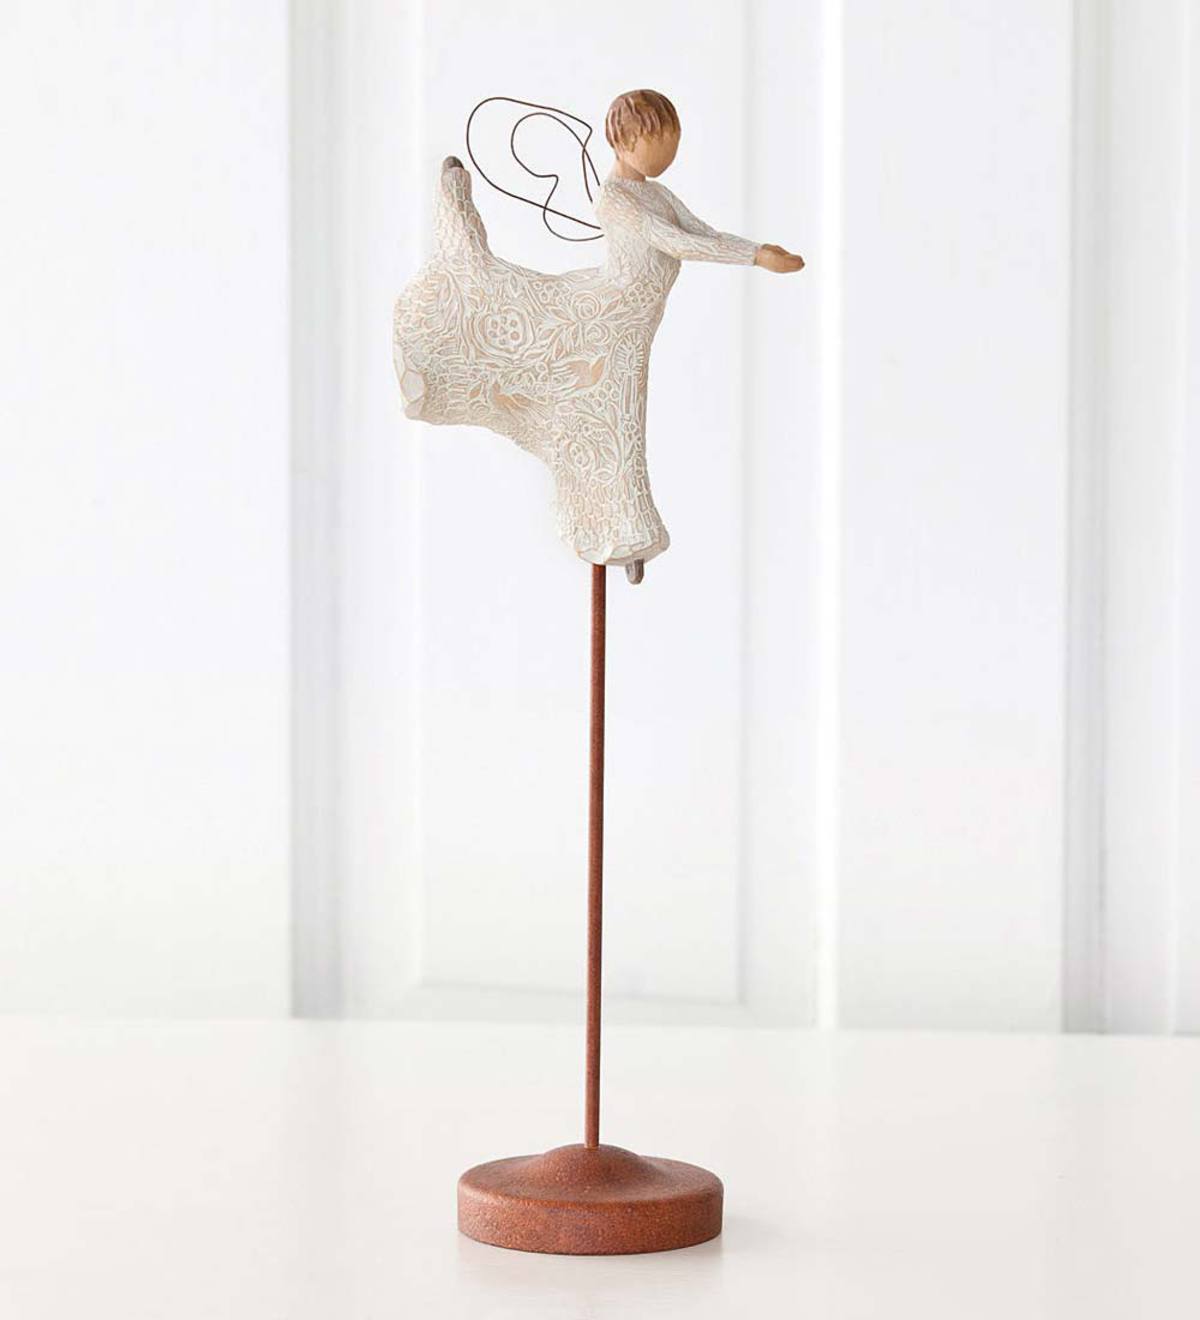 Willow Tree® Dance of Life Figurine